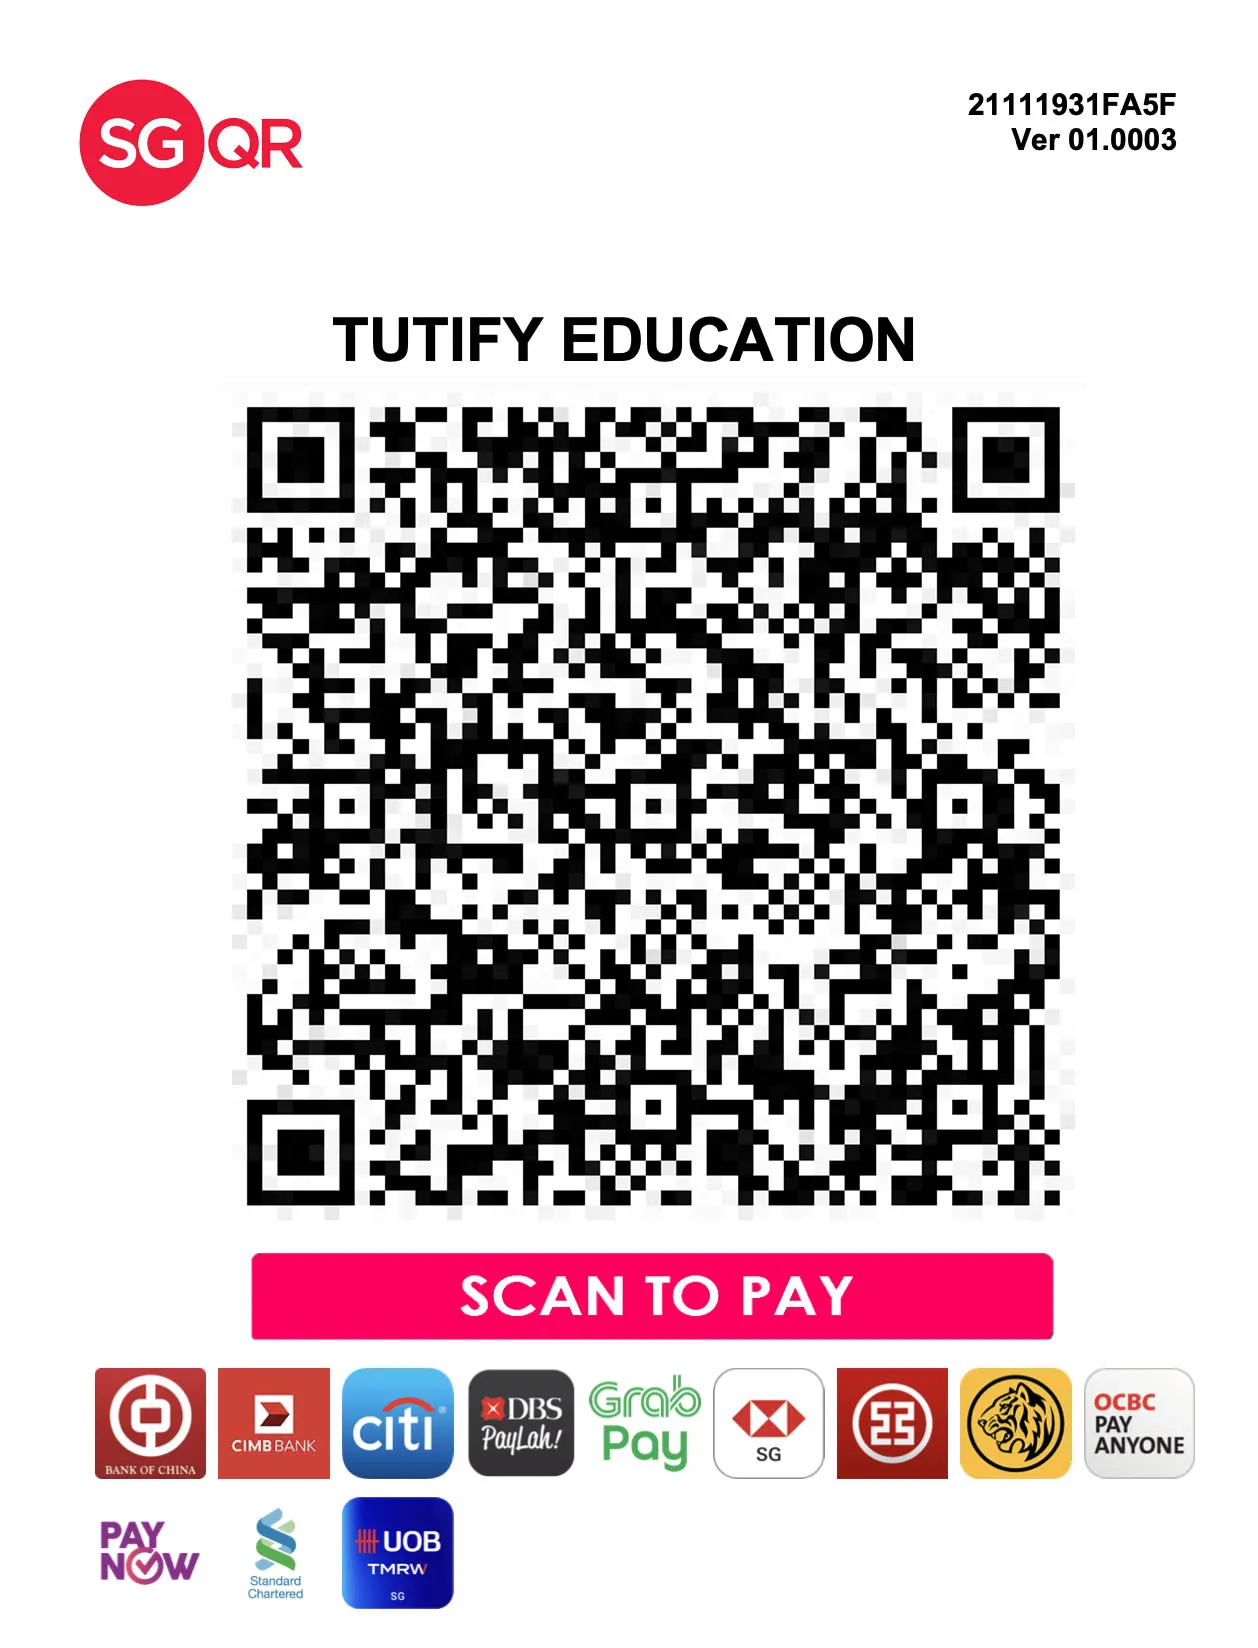 Tutify Education GrabPay QR Code